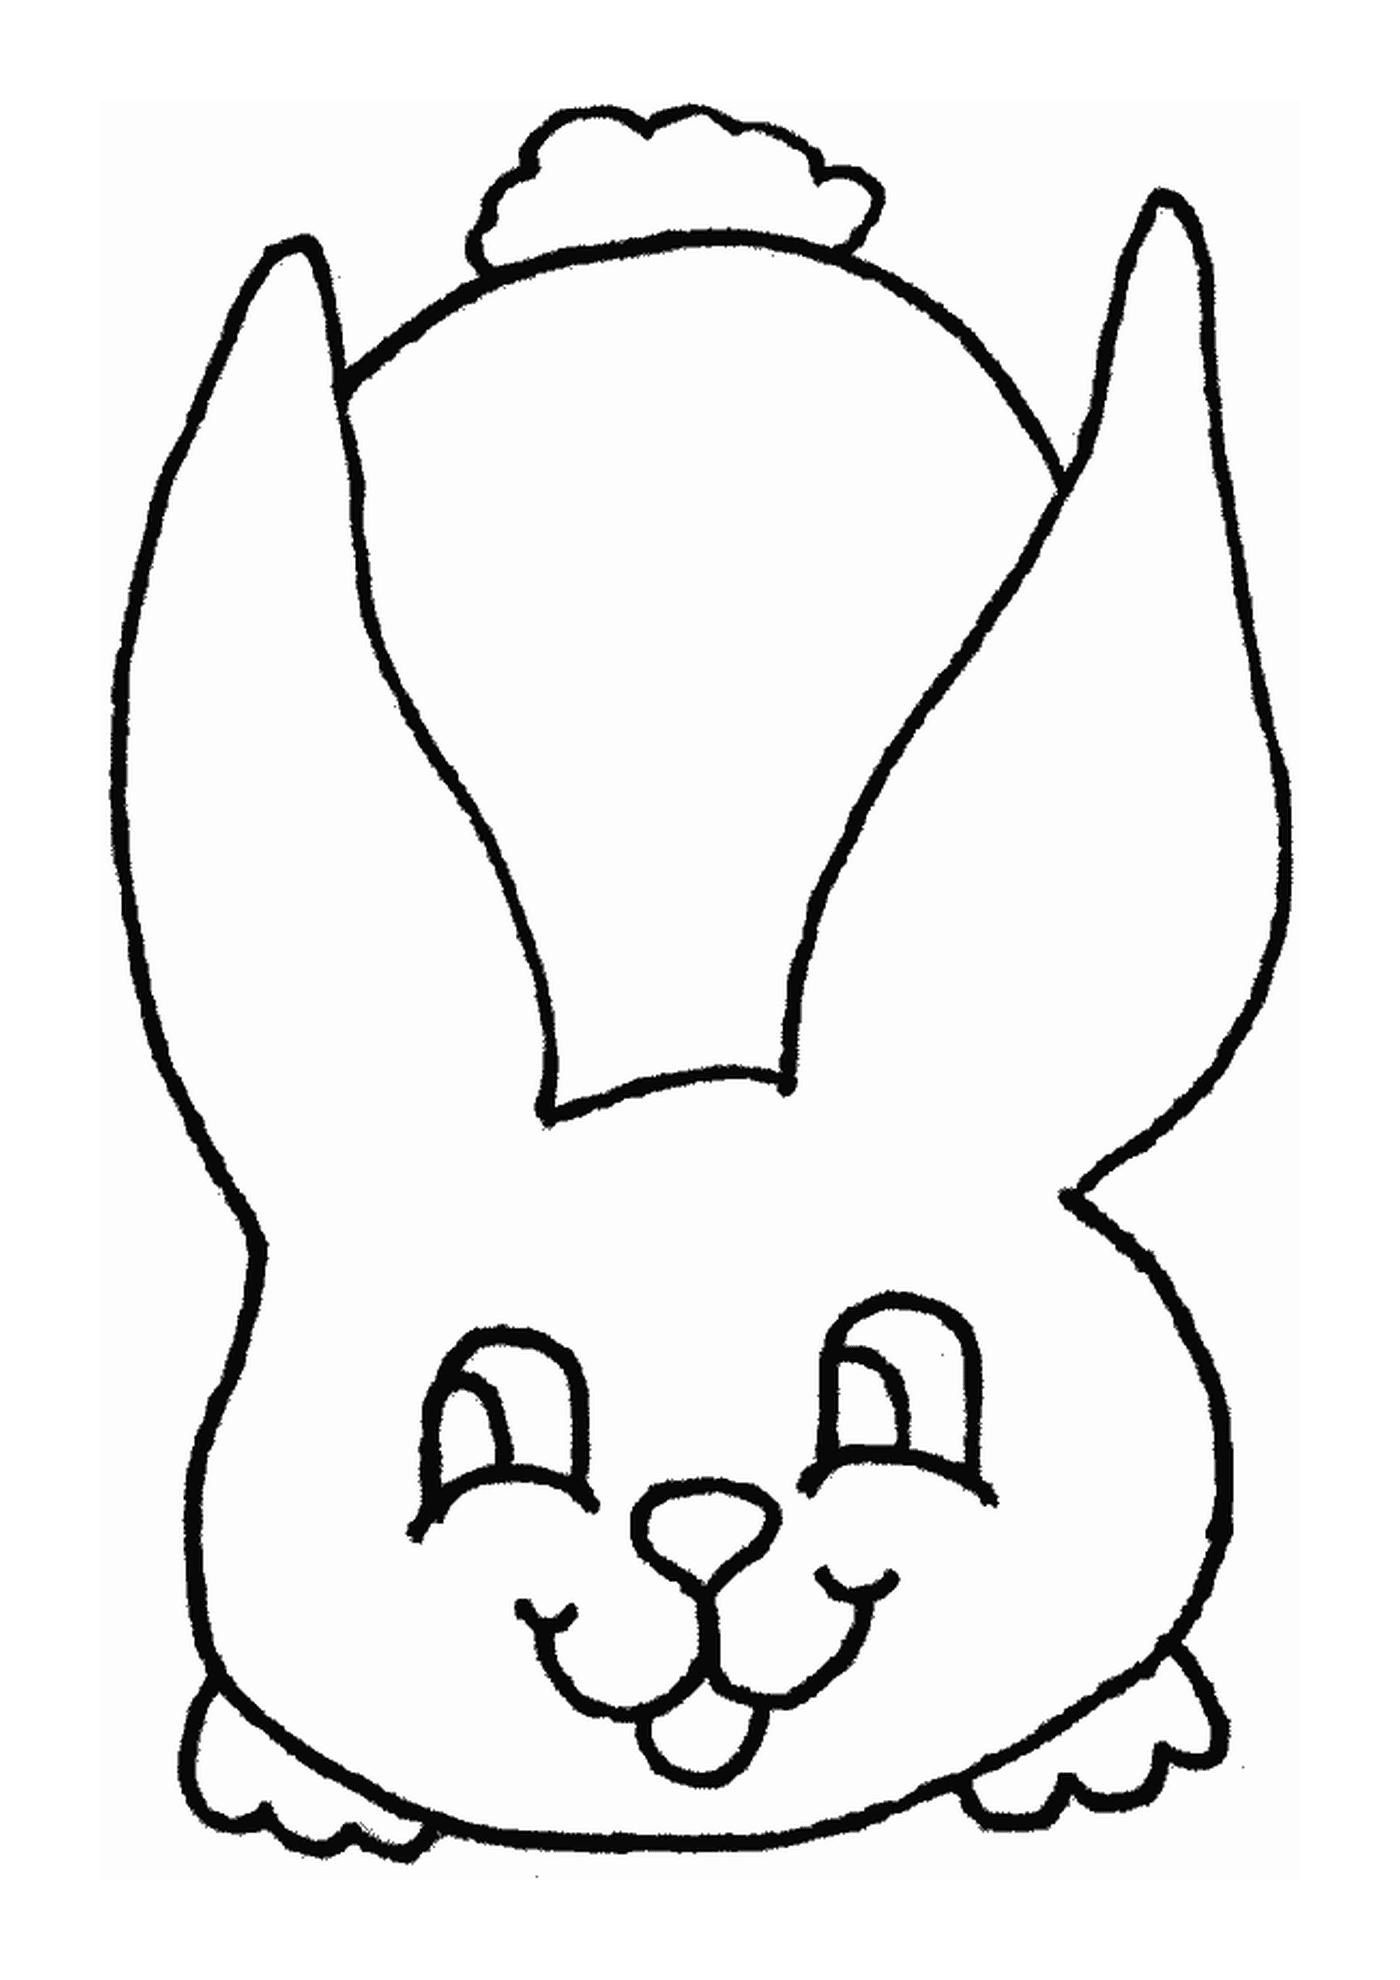  Rabbit face 